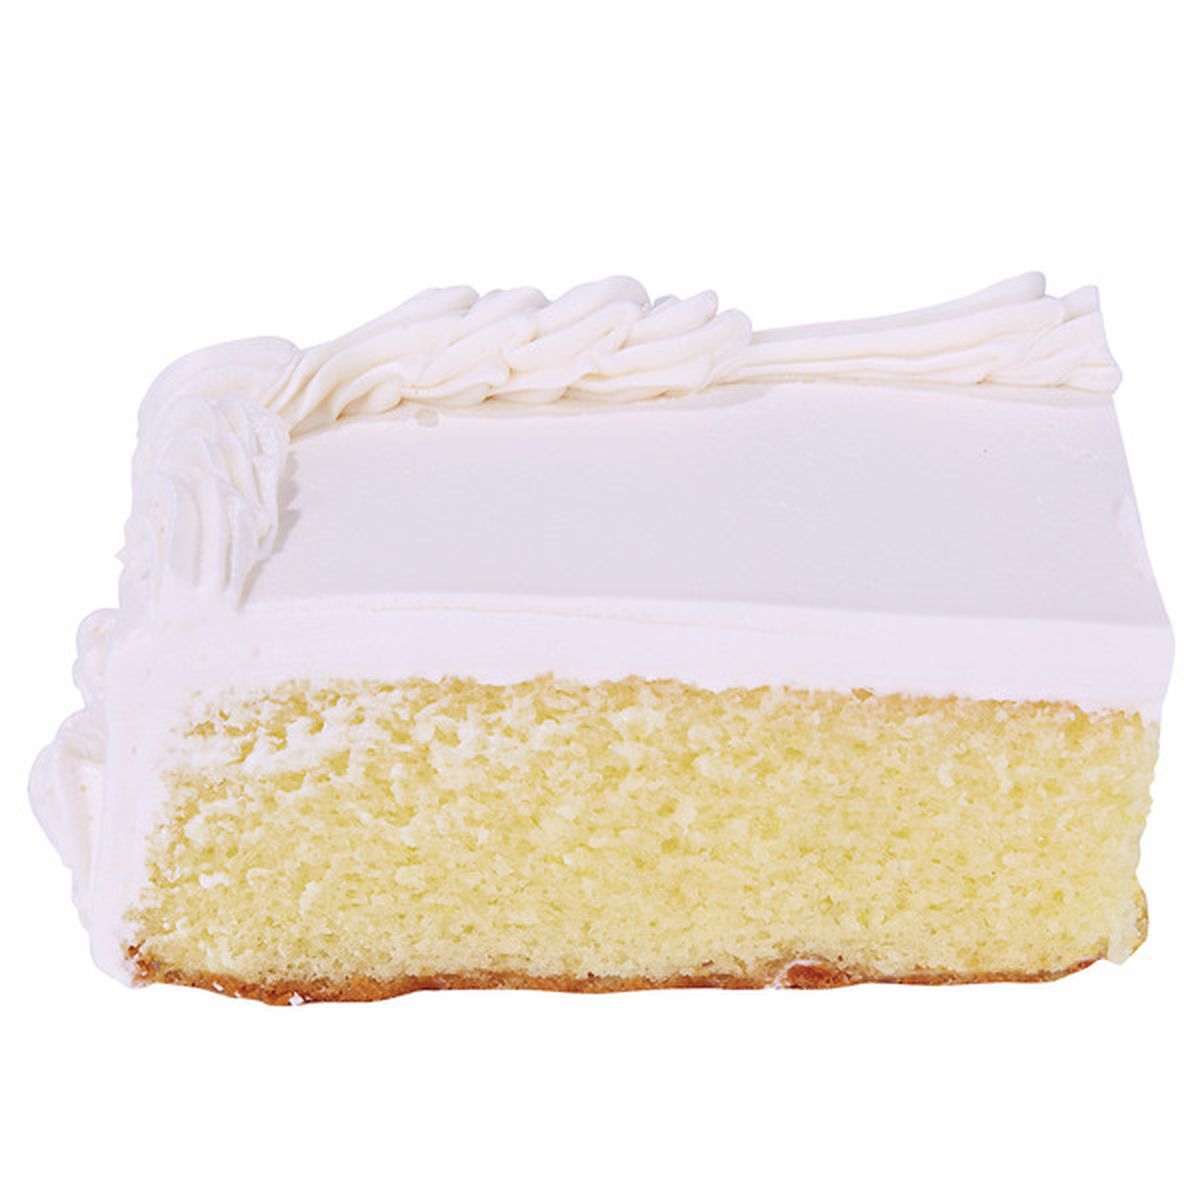 Calories in Wegmans Cake Slice